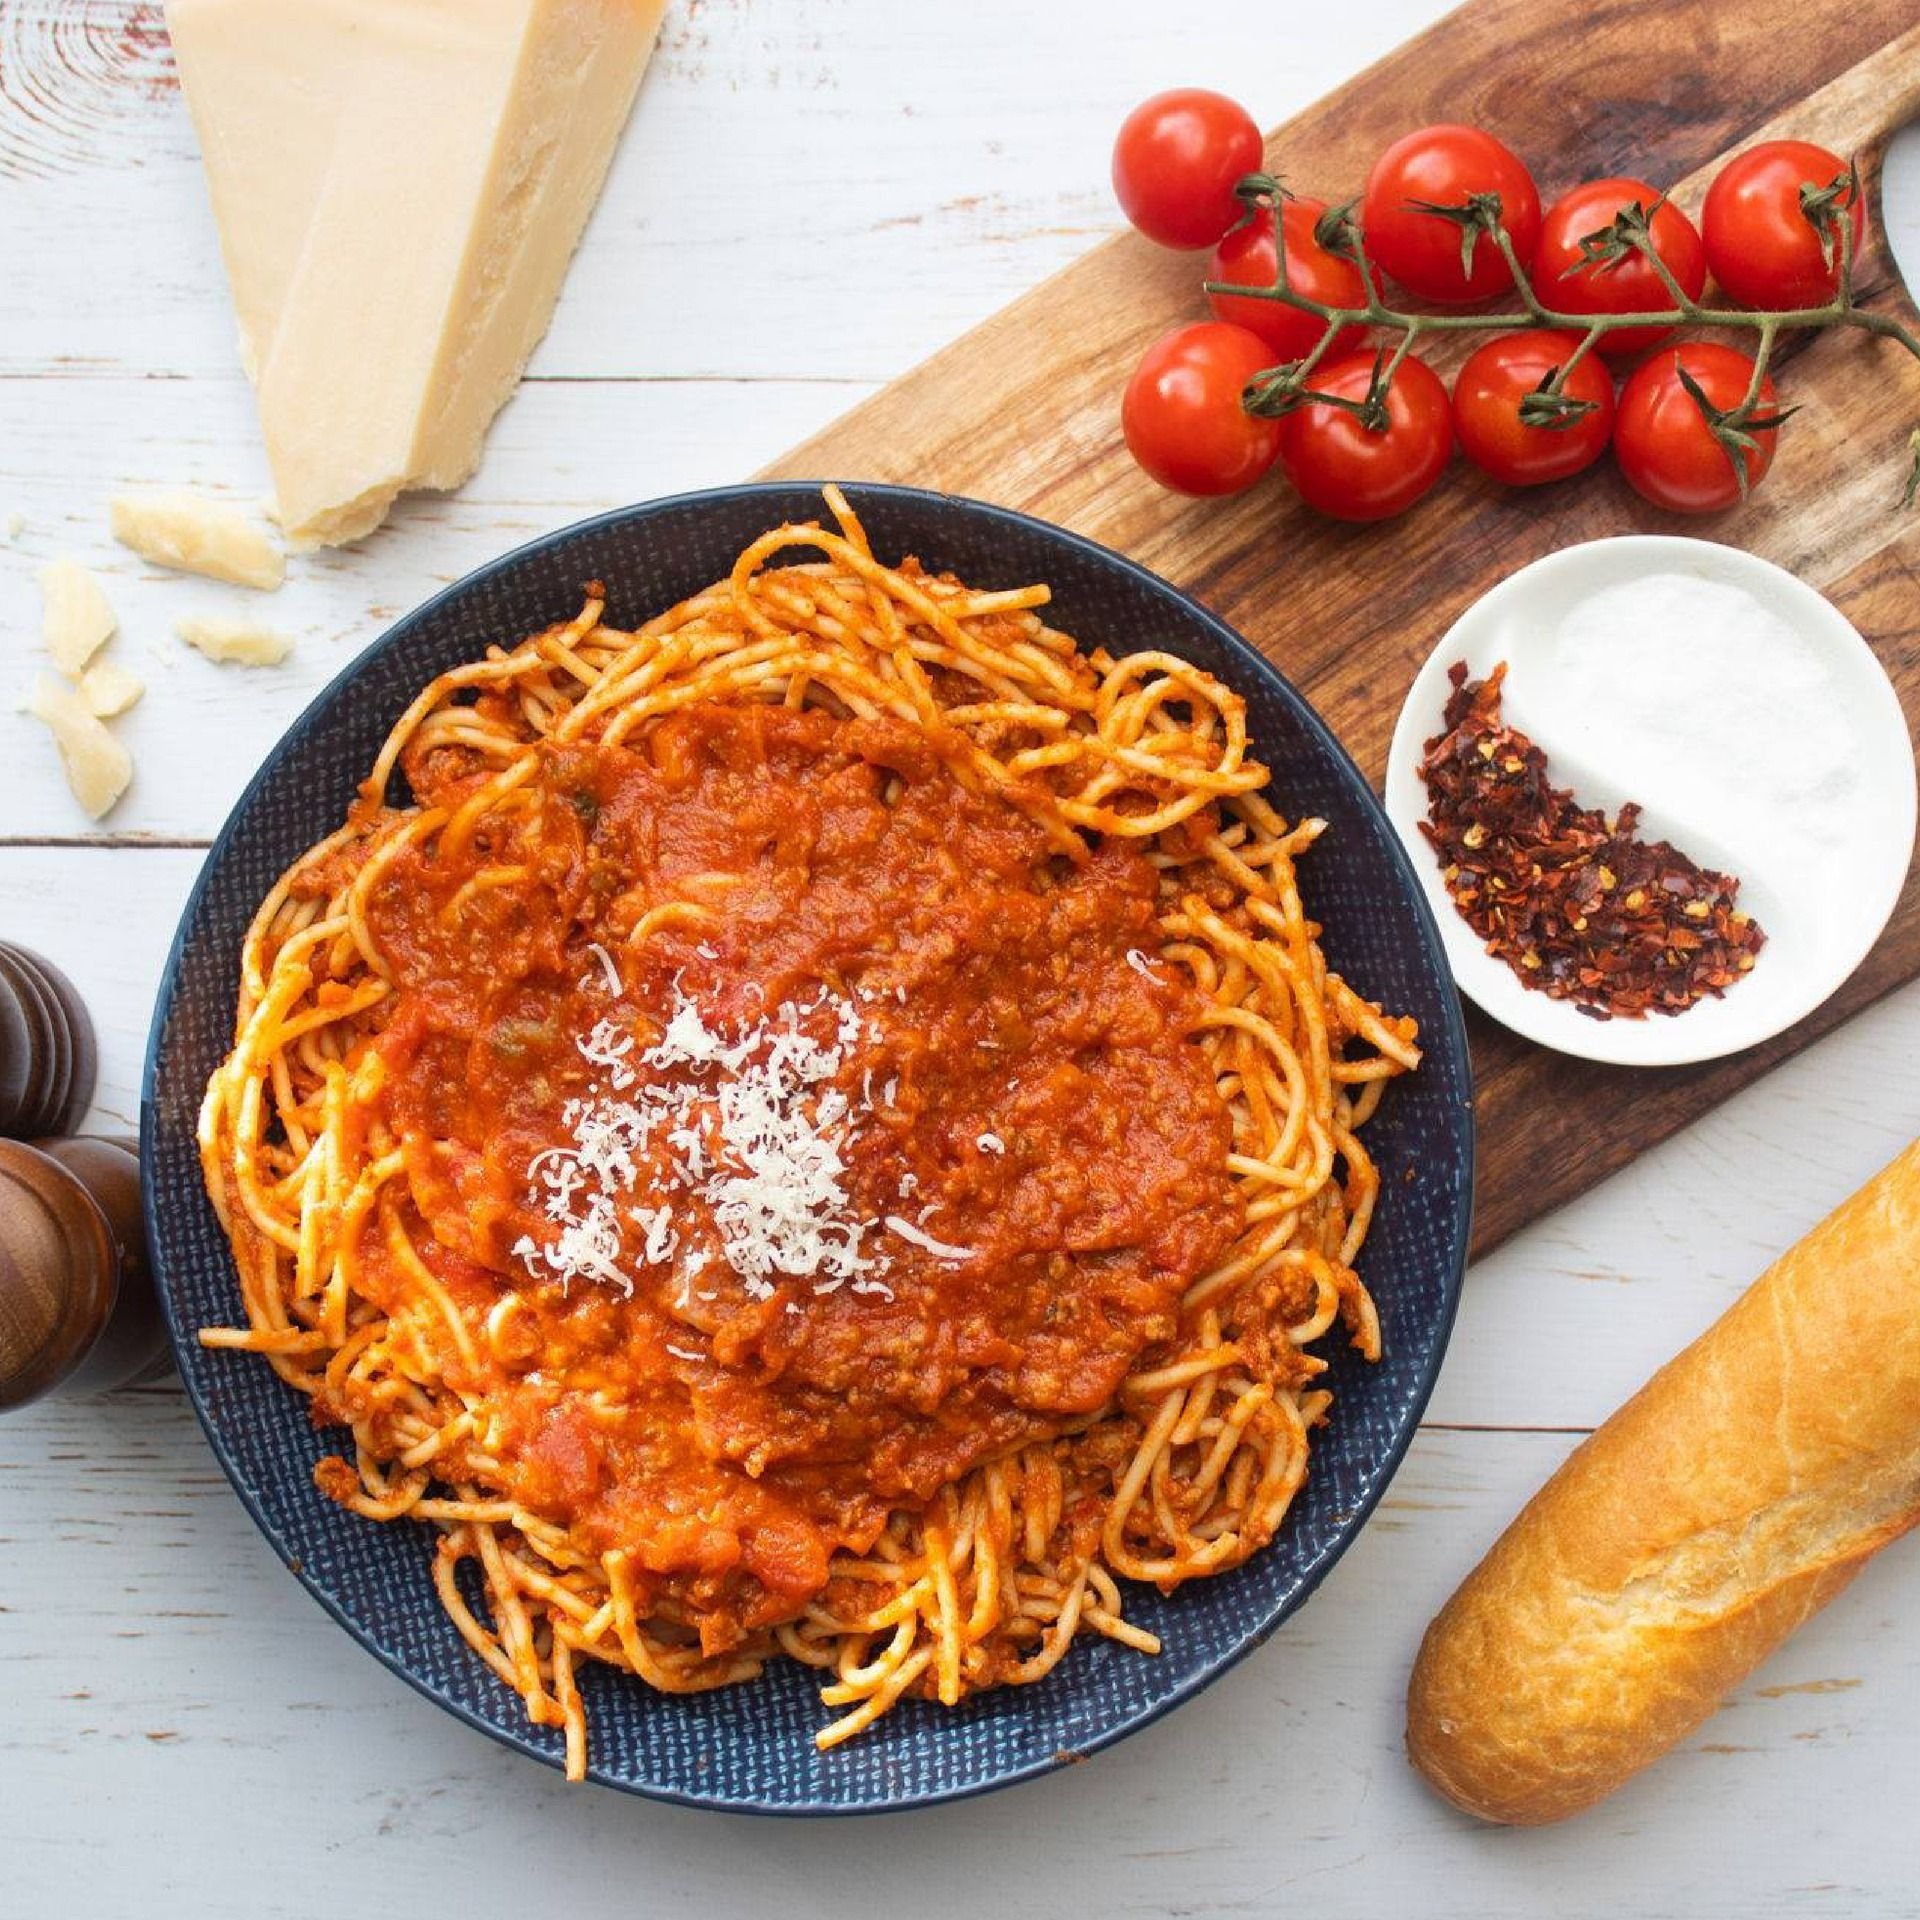 Spaghetti bolognese z pomidorami na szybko: ekspresowa klasyka